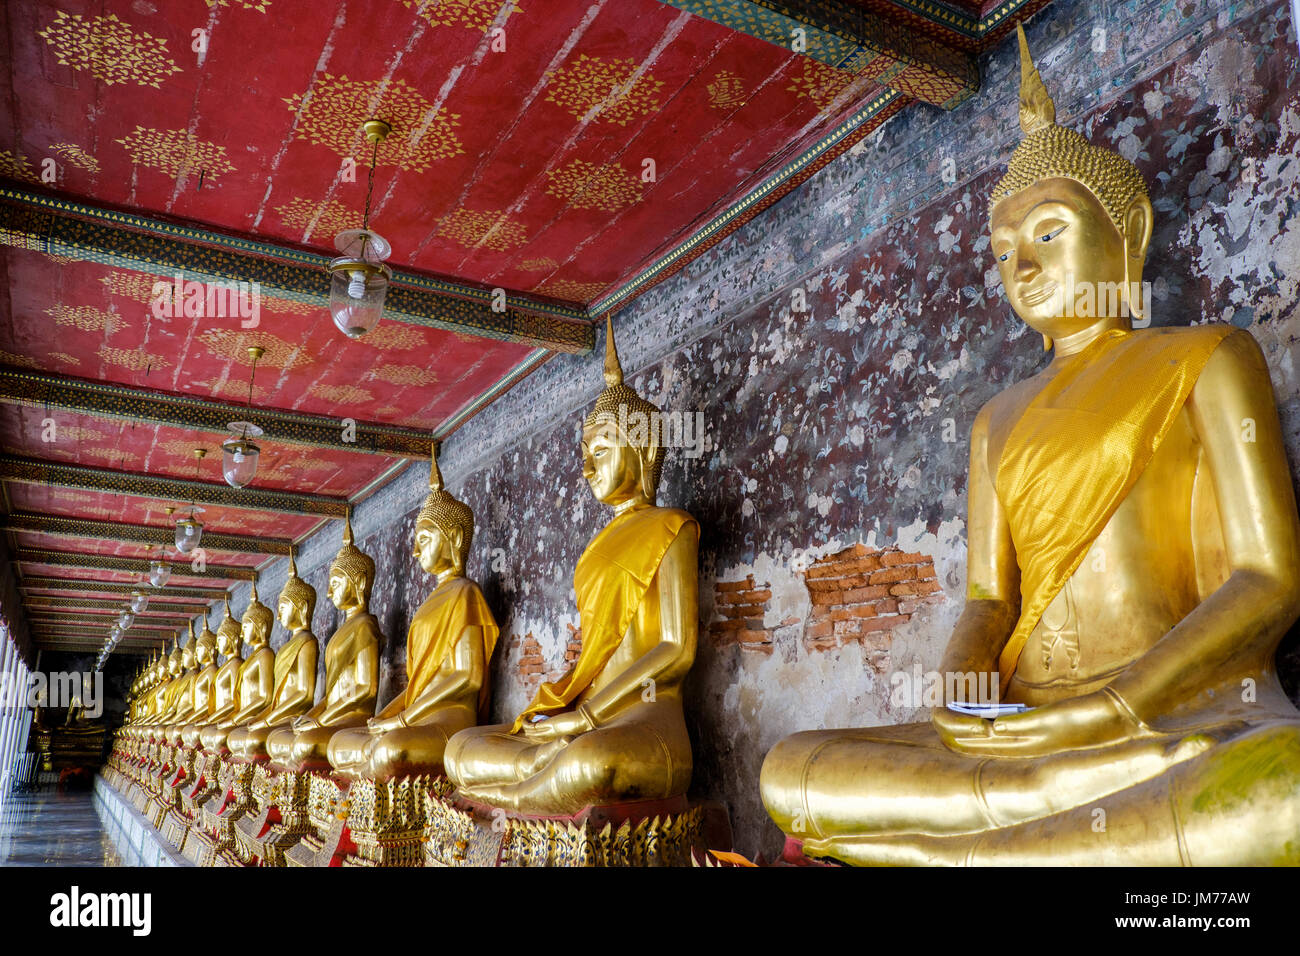 Sitting Buddha statues in the external corridor of Wat Suthat Thepwararam, a Buddhist temple in Bangkok, Thailand. Stock Photo